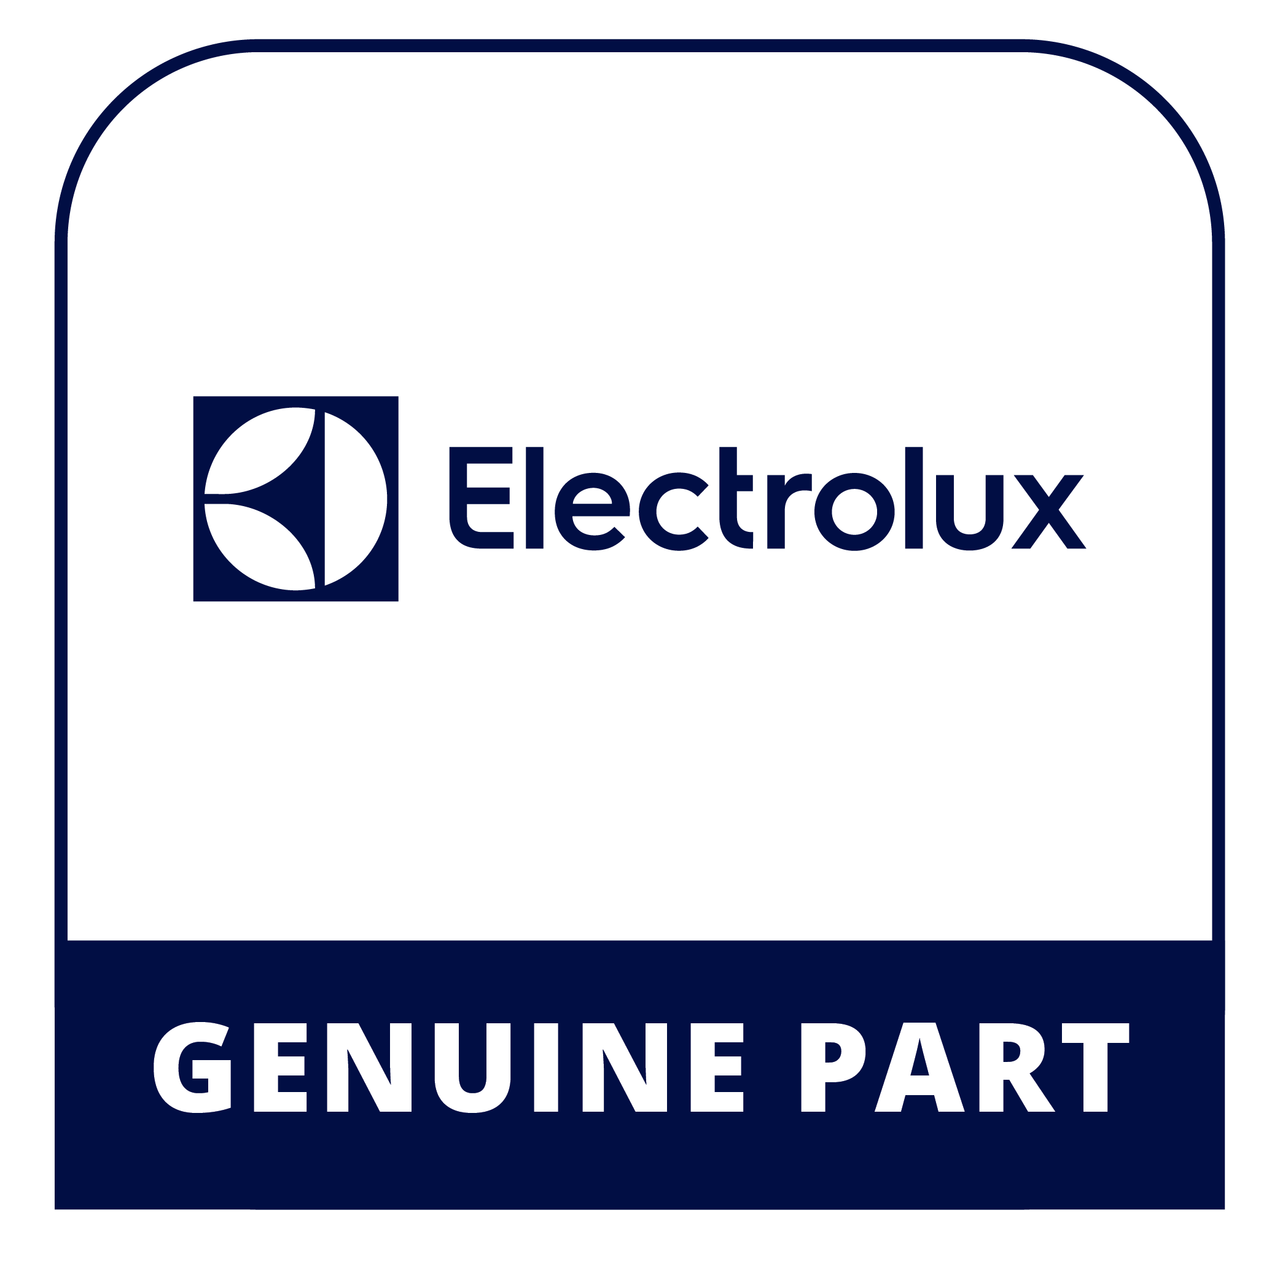 Frigidaire - Electrolux 5304521297 Label-Energy E-Star - Genuine Electrolux Part